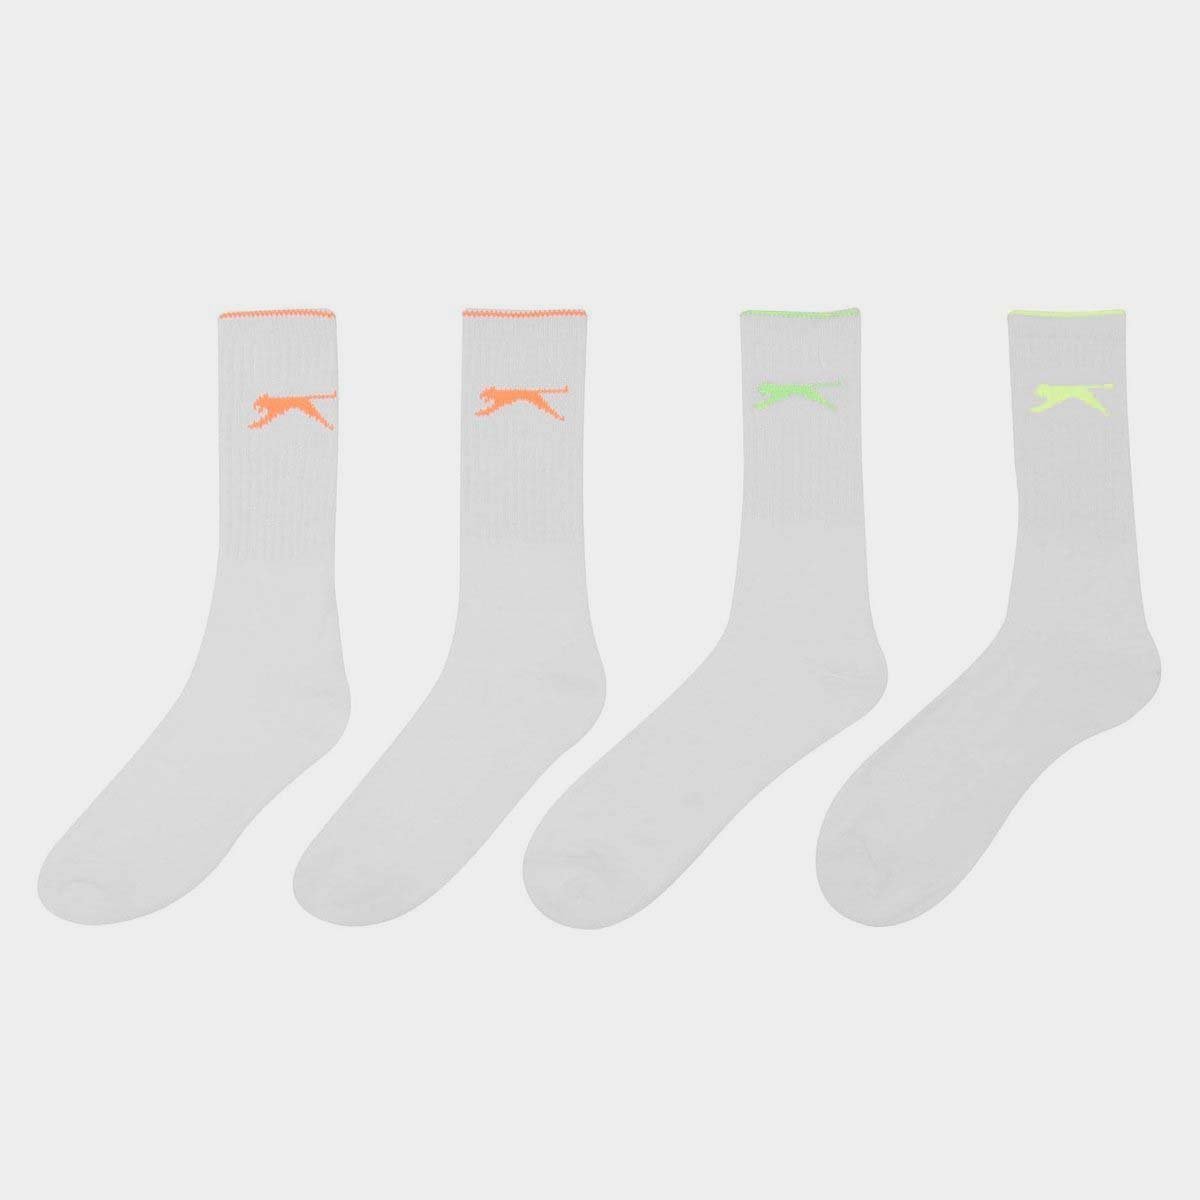 VYPR SPORTS VENM 2.0 Performance Grip Socks